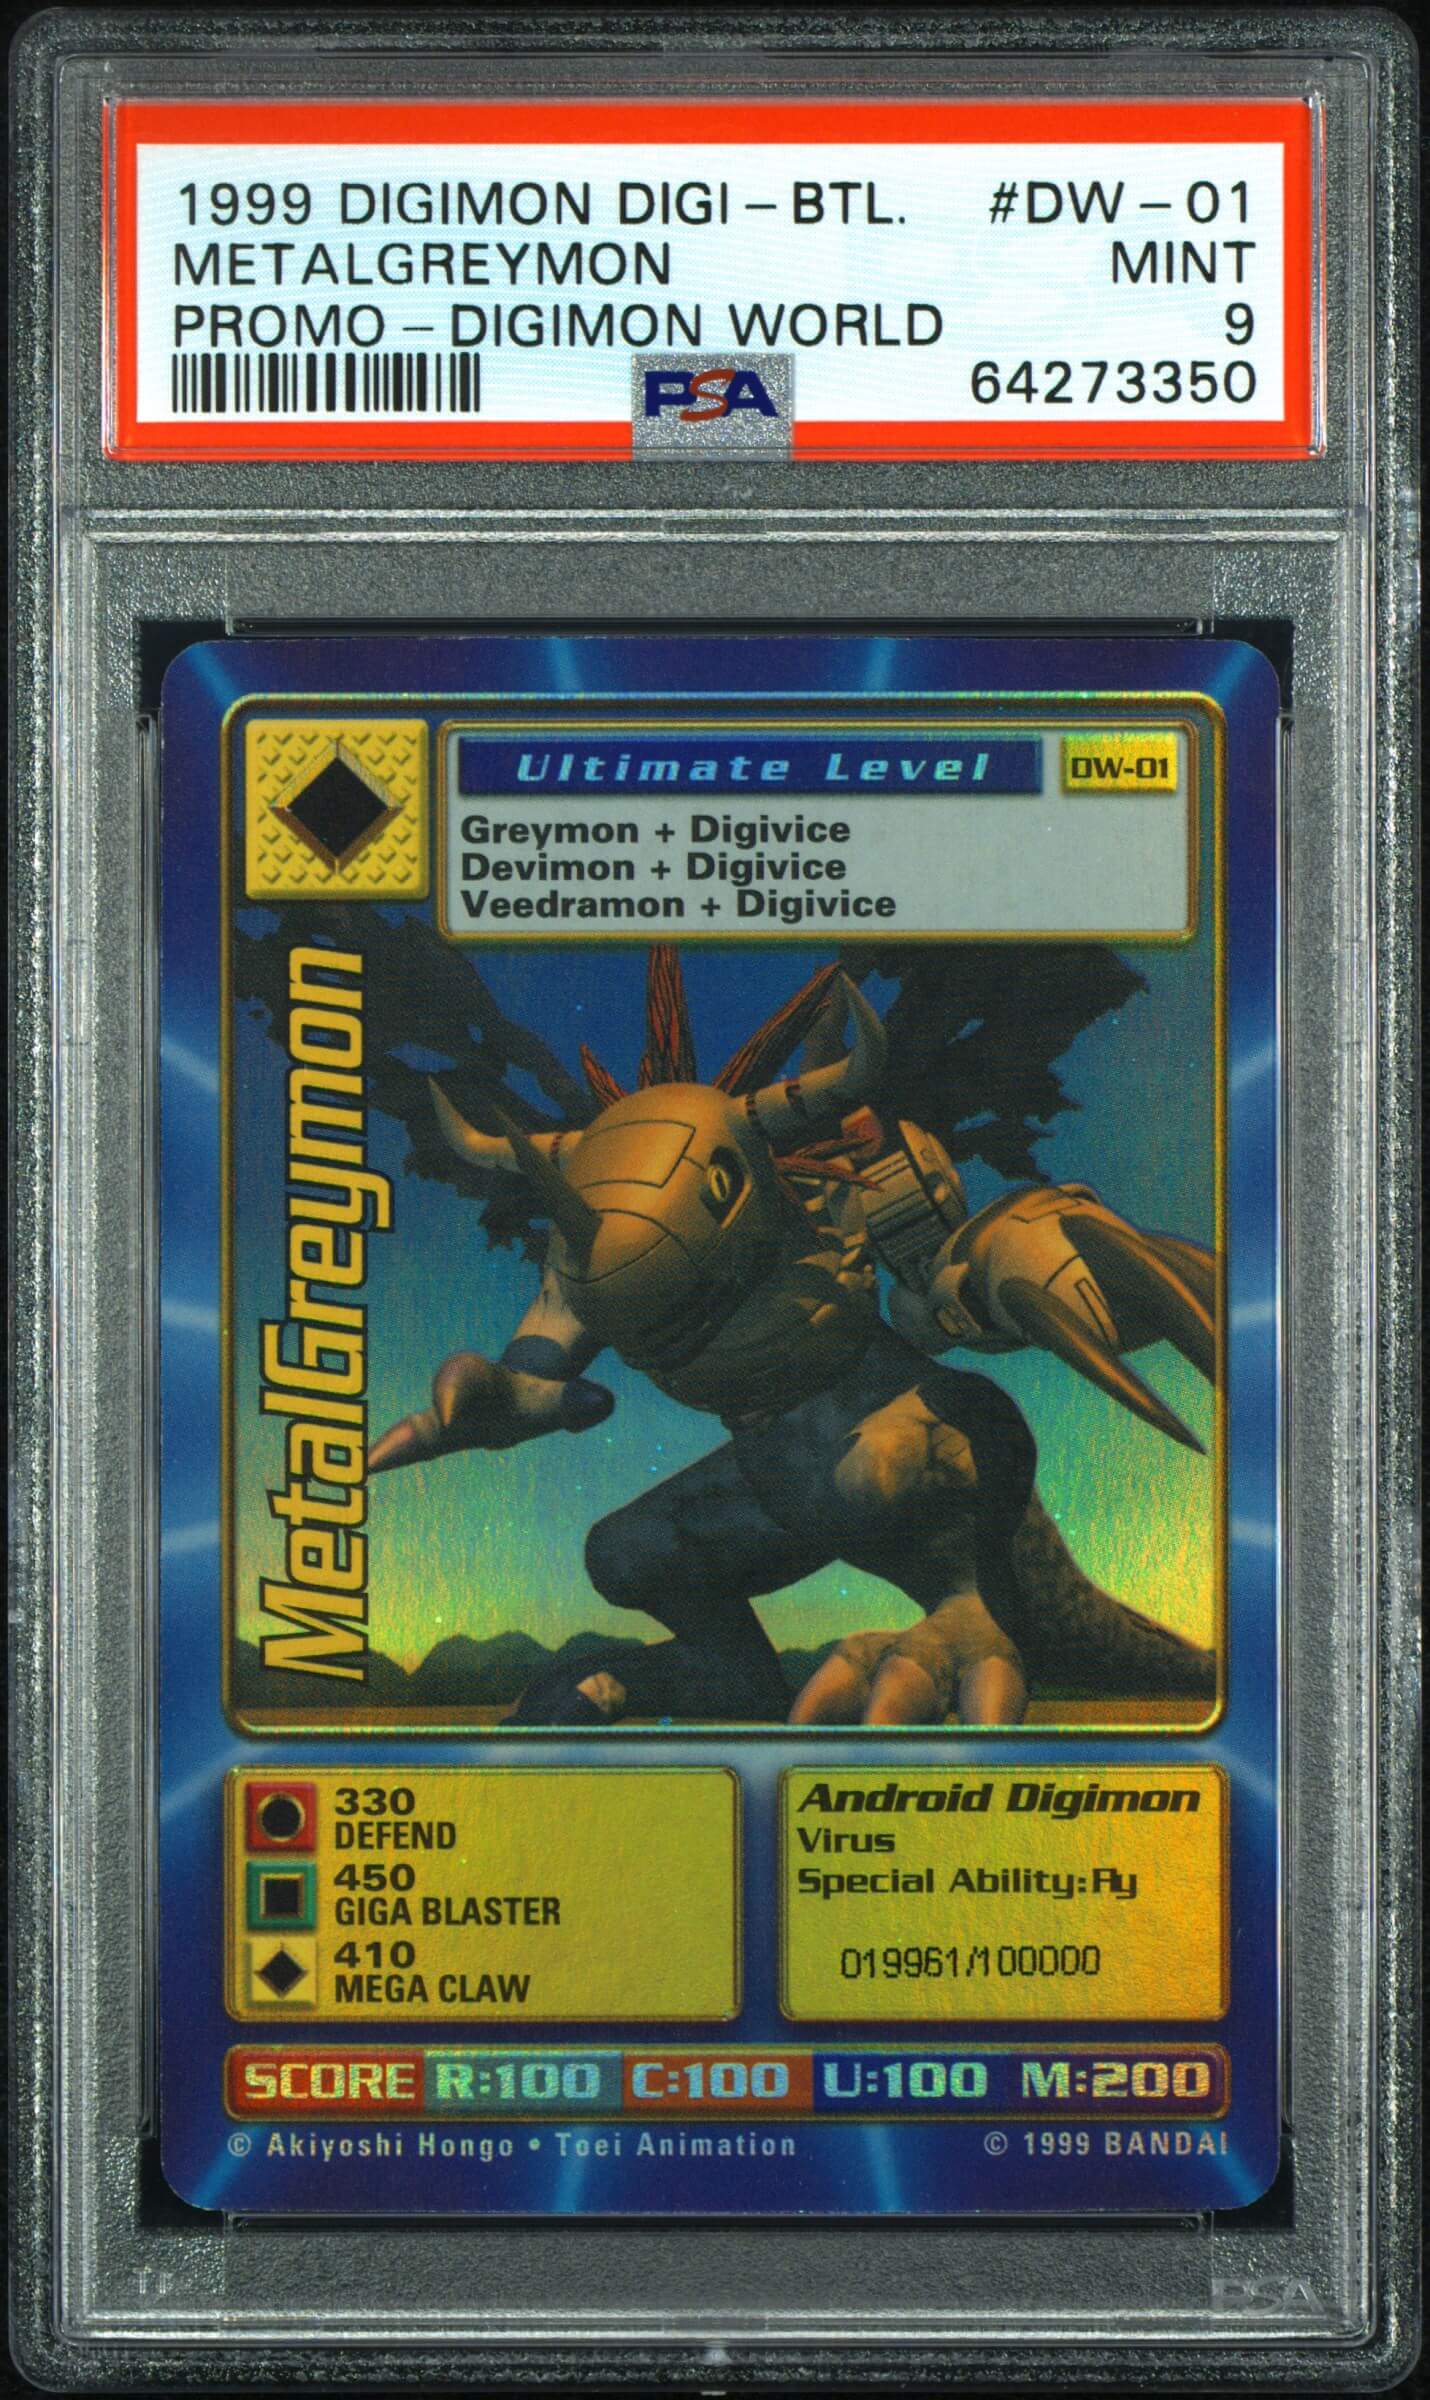 Digimon World PlayStation Promo DW-01 MetalGreymon - number 019961 / 100,000